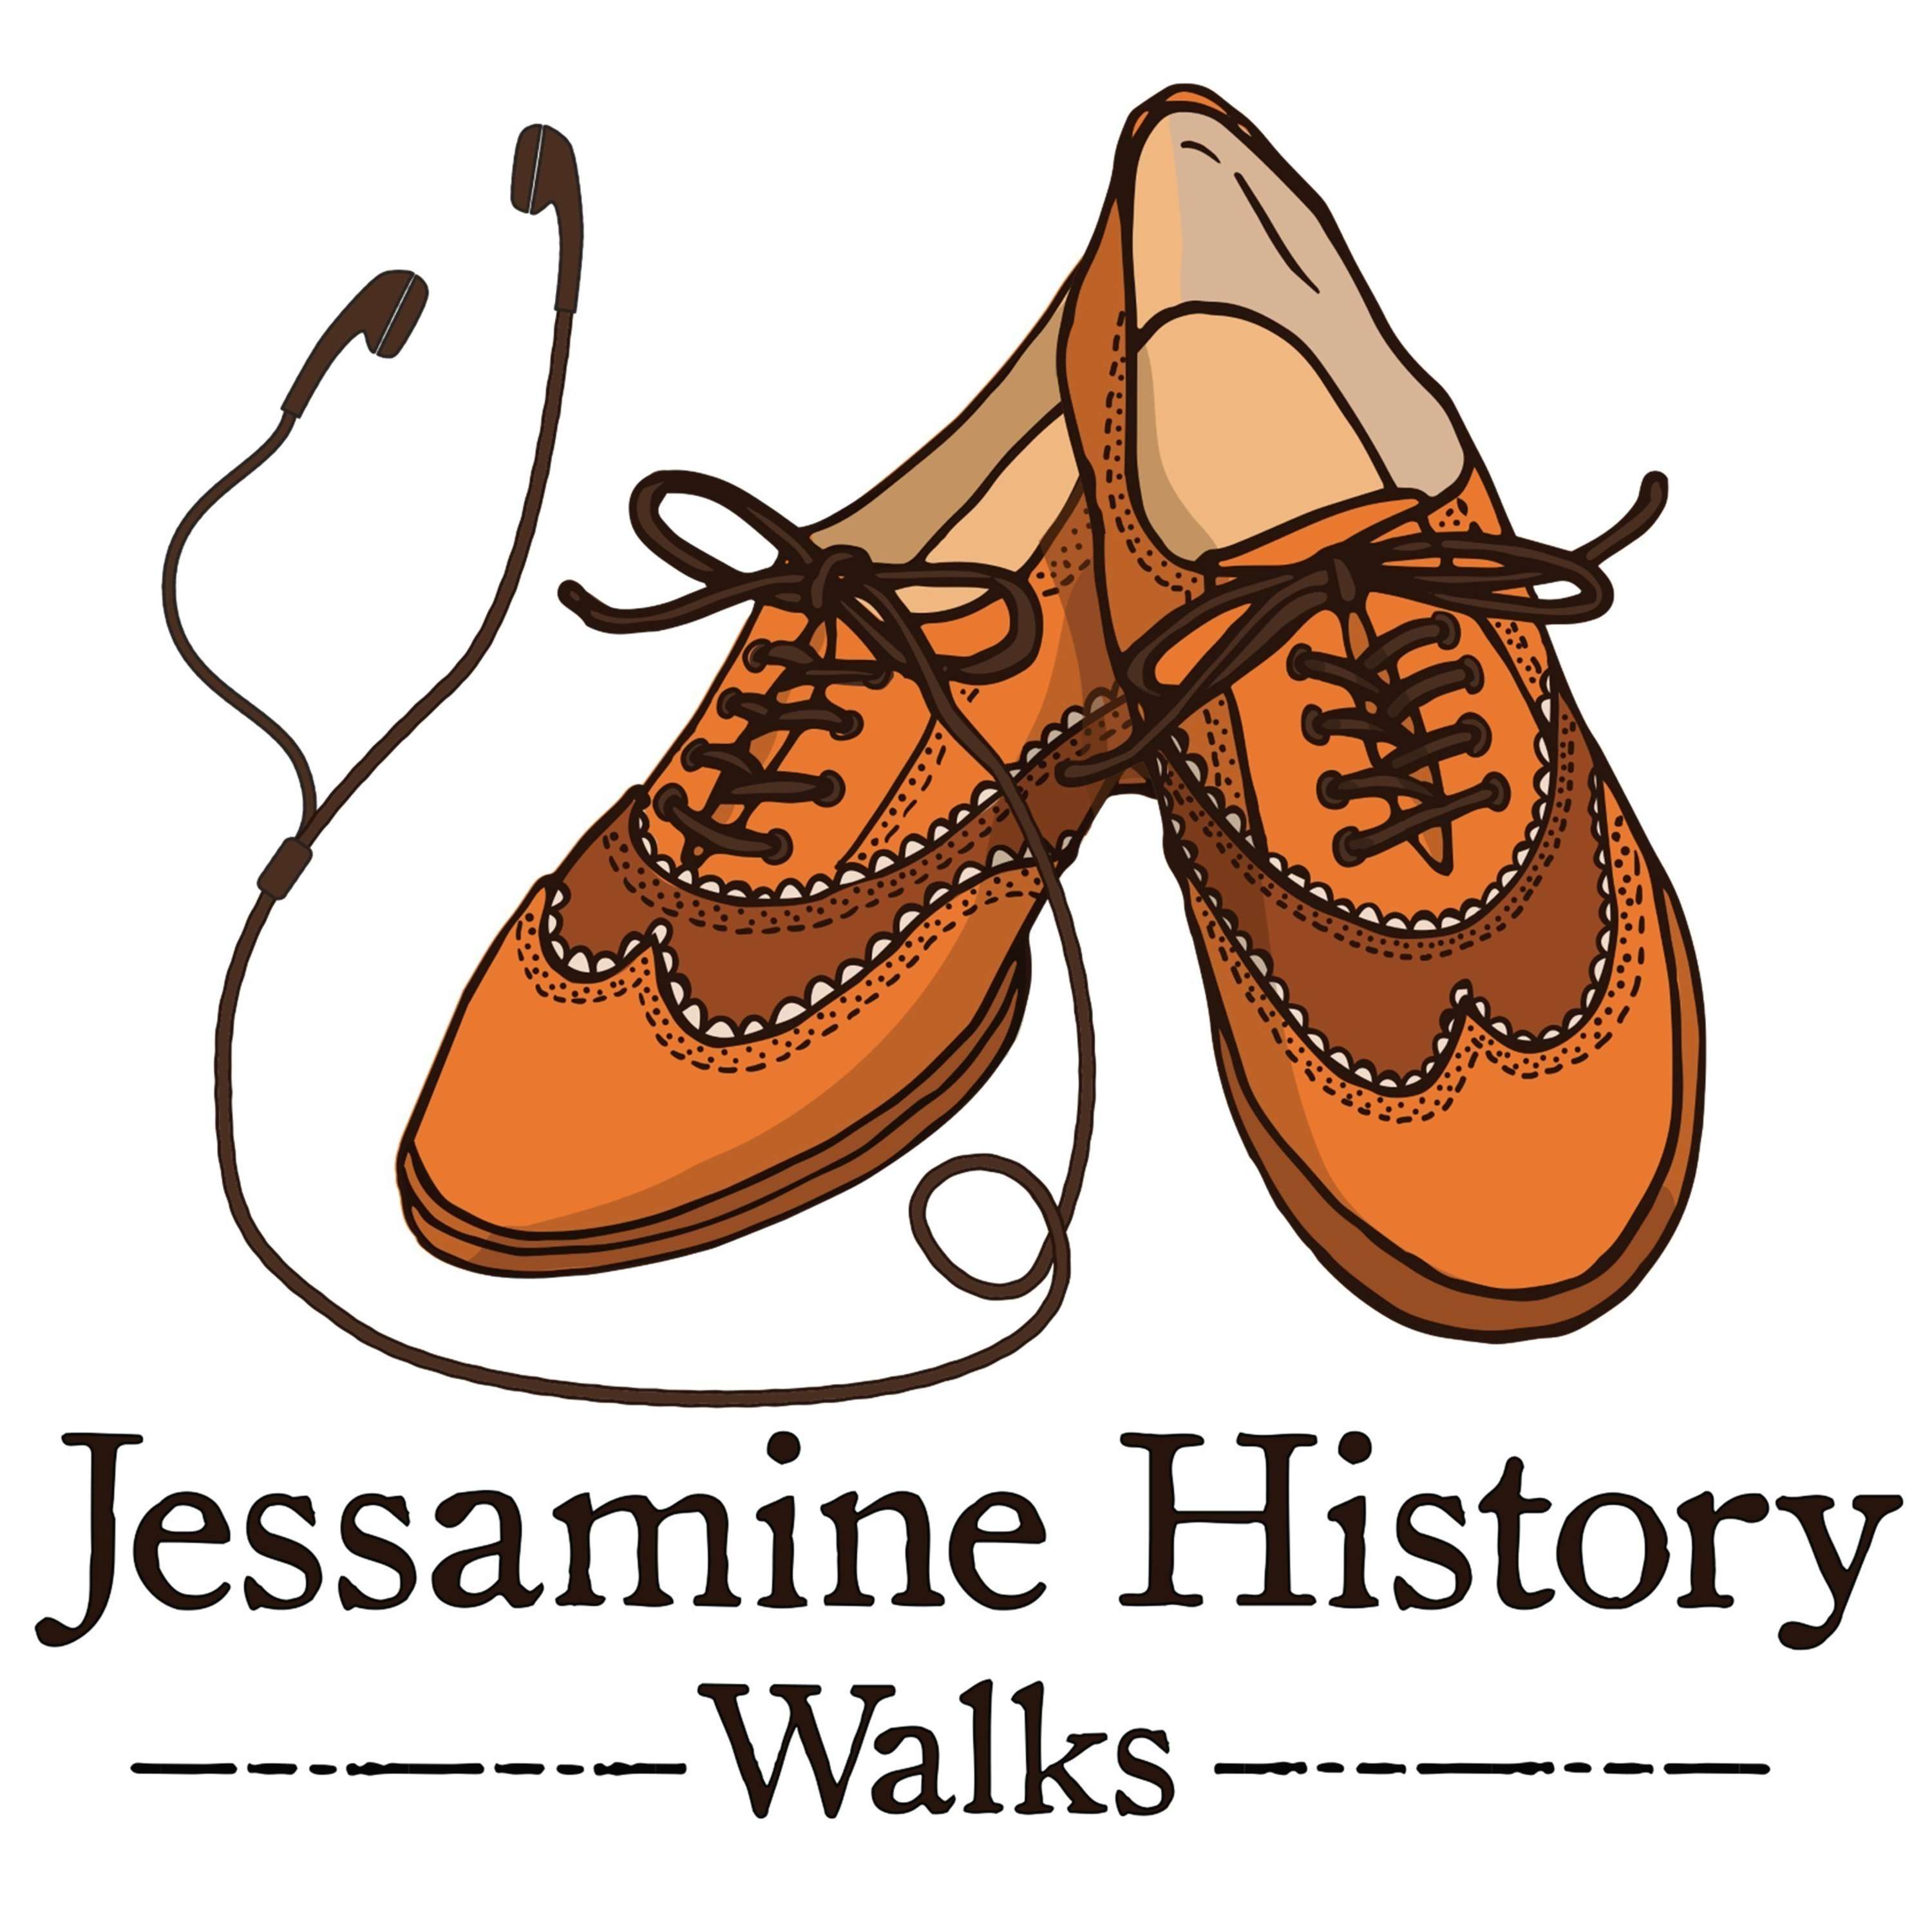 Jessamine History Walks